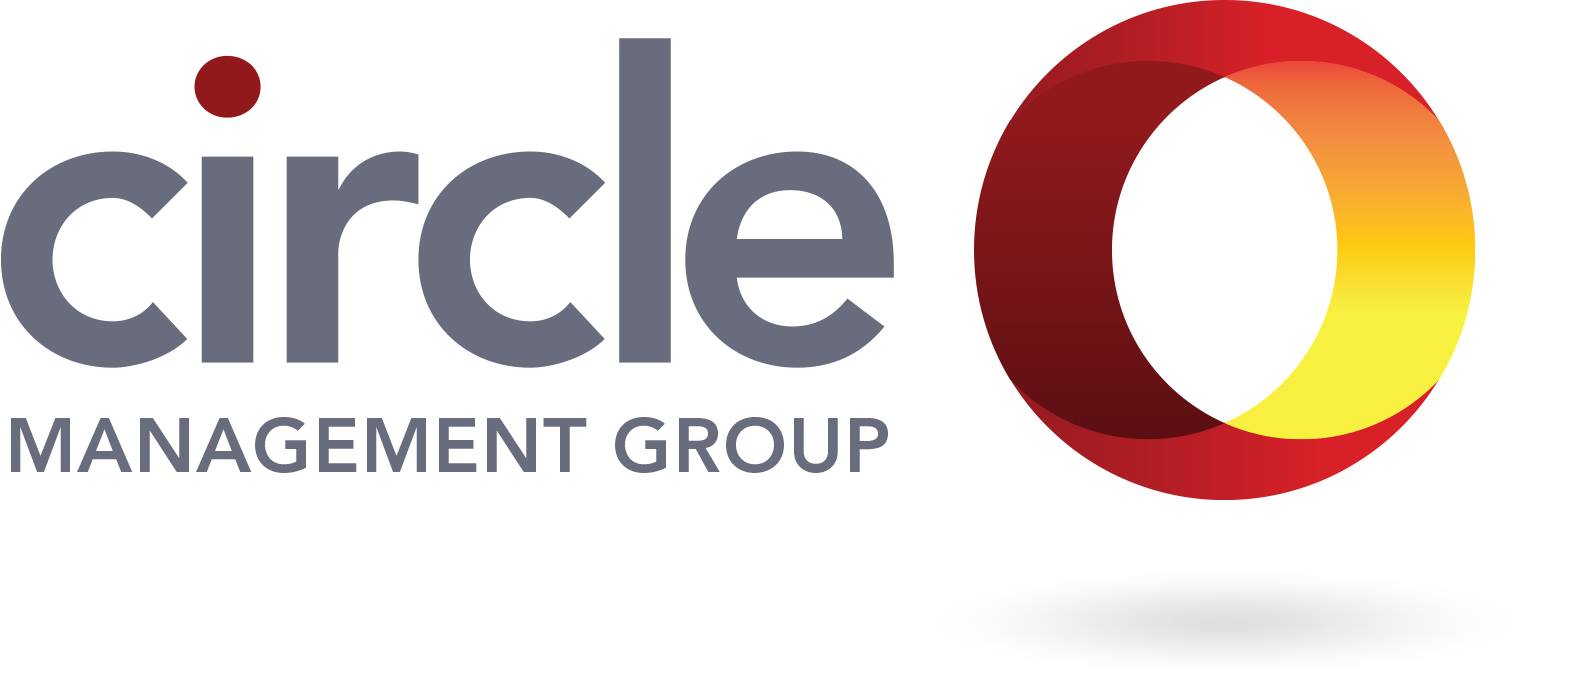 Circle Management Group logo